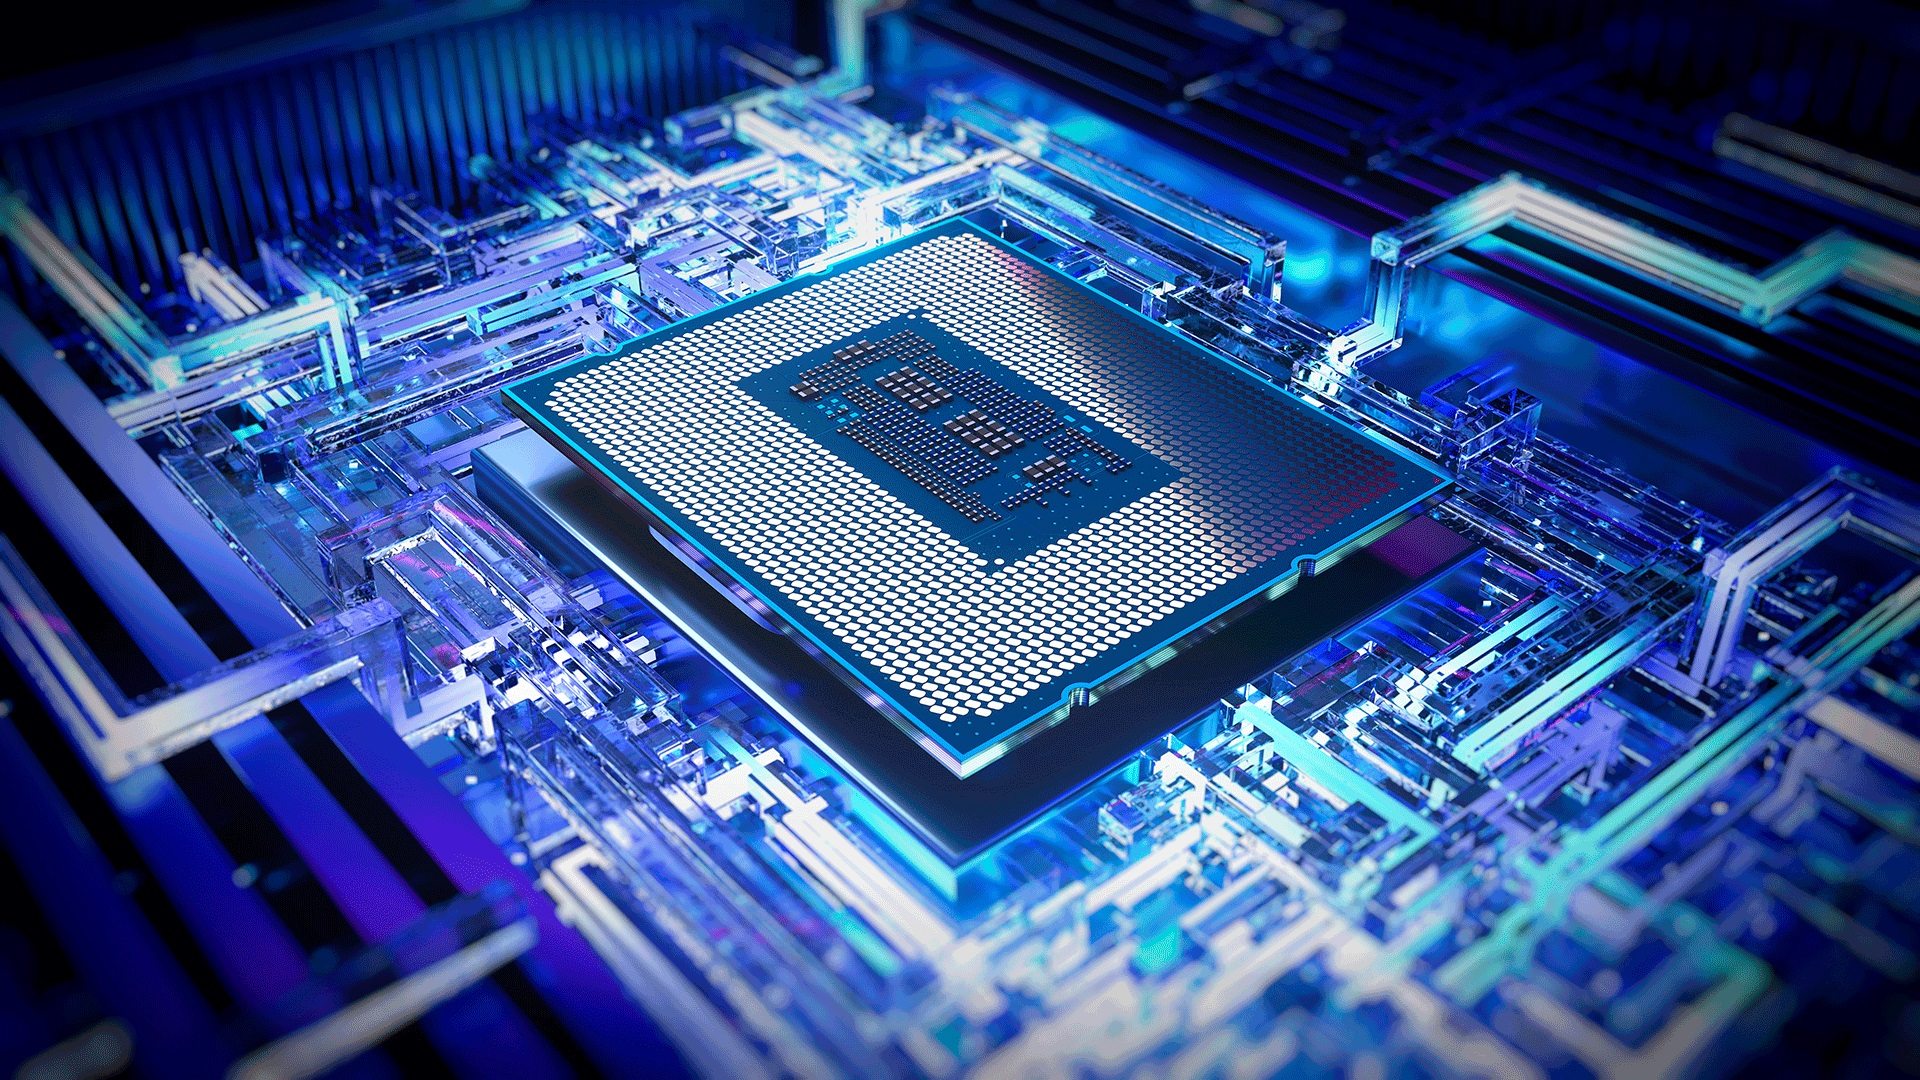 Media Alert: New 8th Gen Intel Core Processor Family to Debut Aug. 21